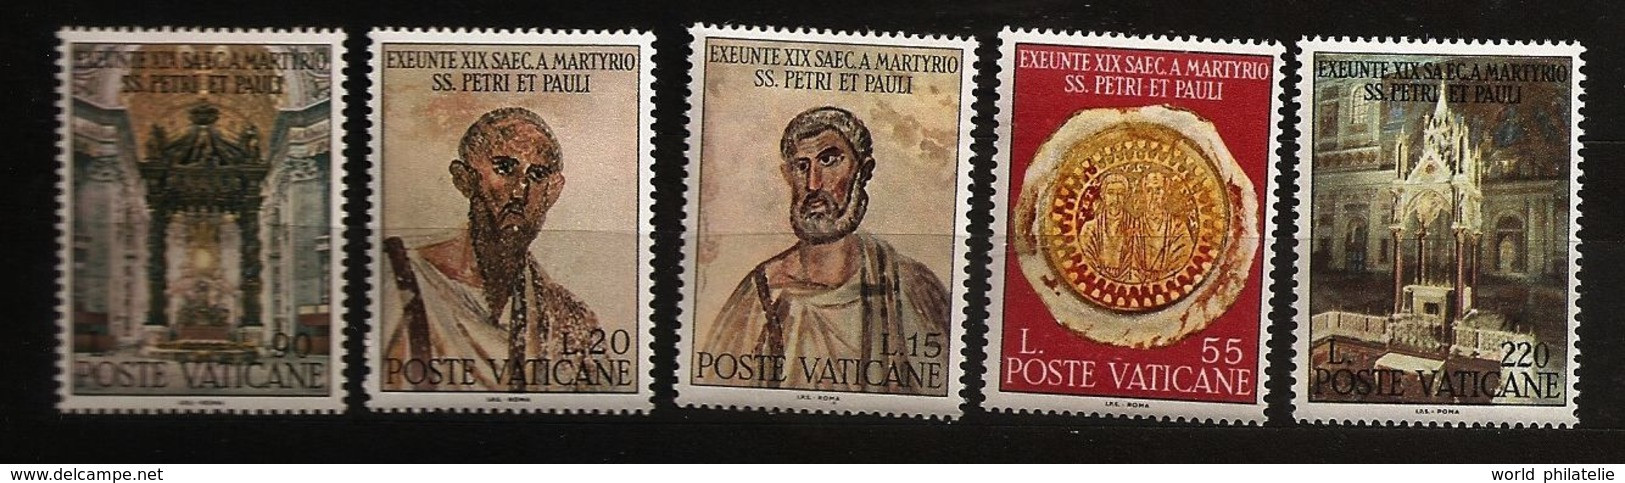 Vatican 1967 N° 466 / 70 ** Saint Pierre, Saint Paul, Sceau, Baldaquin De Bernini, Rome, Arnolfo Di Cambilo, Tabernacle - Unused Stamps